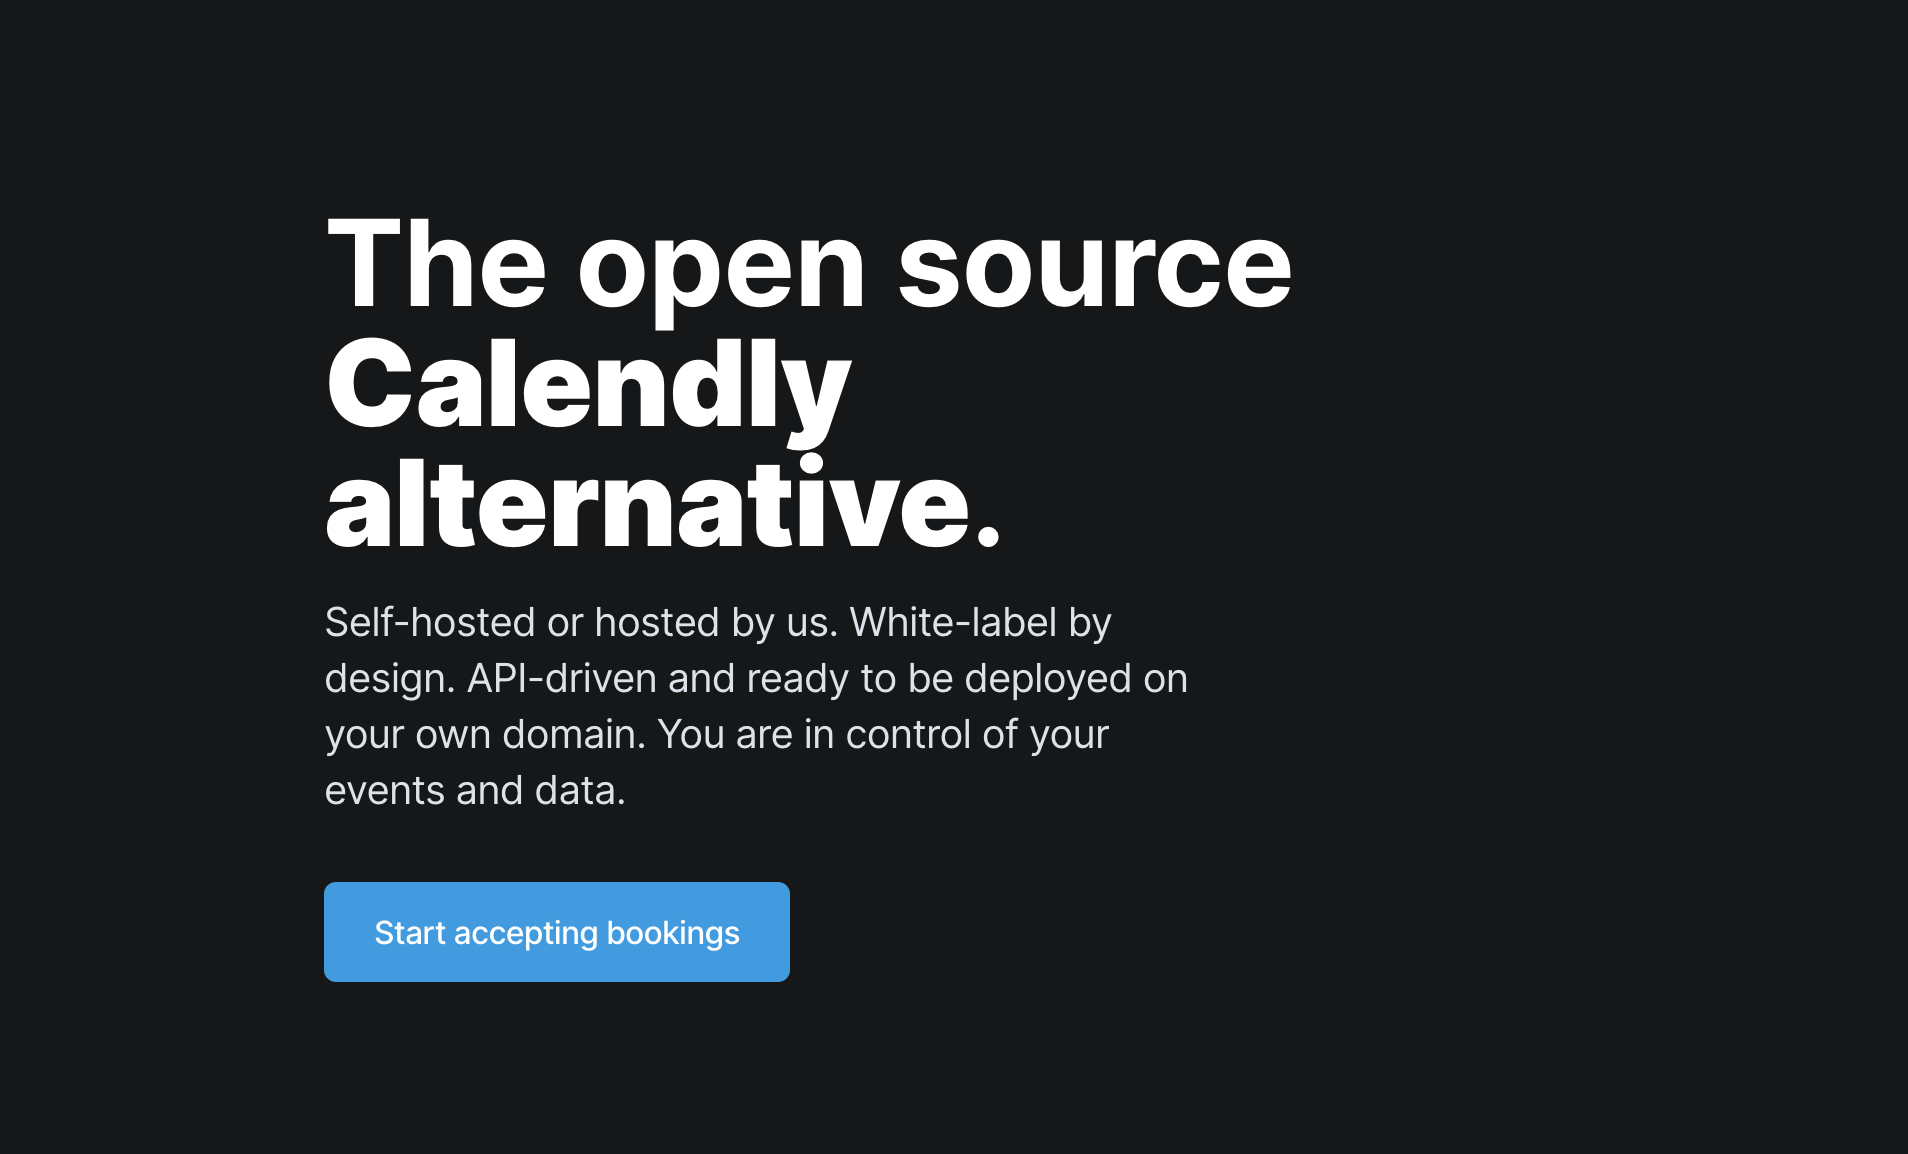 Calendso: The open source Calendly alternative